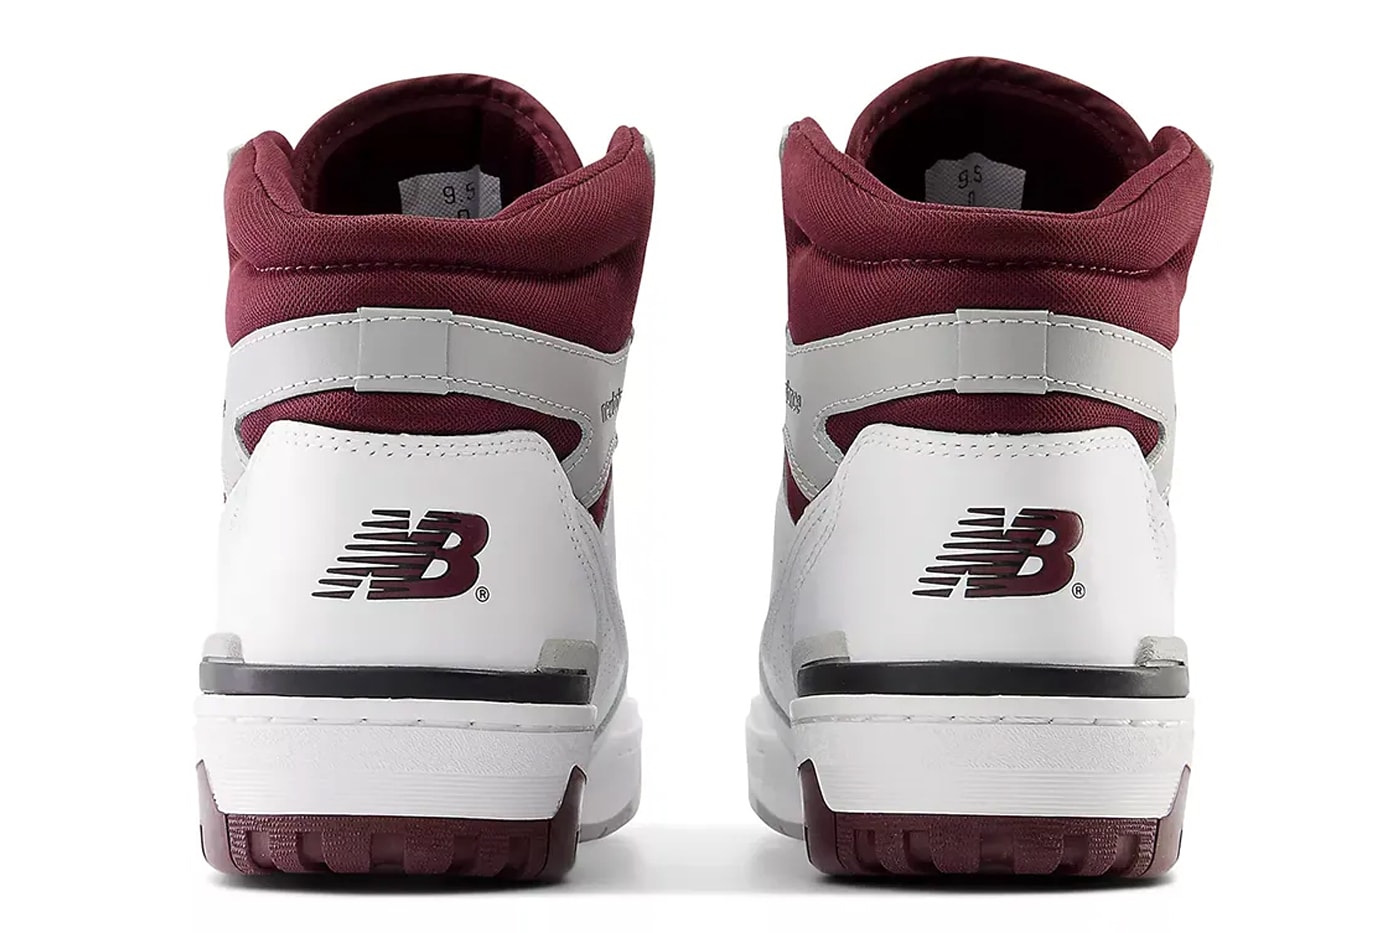 New Balance 650 Surfaces in "Burgundy" BB650RCH White/Burgundy/Raincloud nb high tops basketball shoes